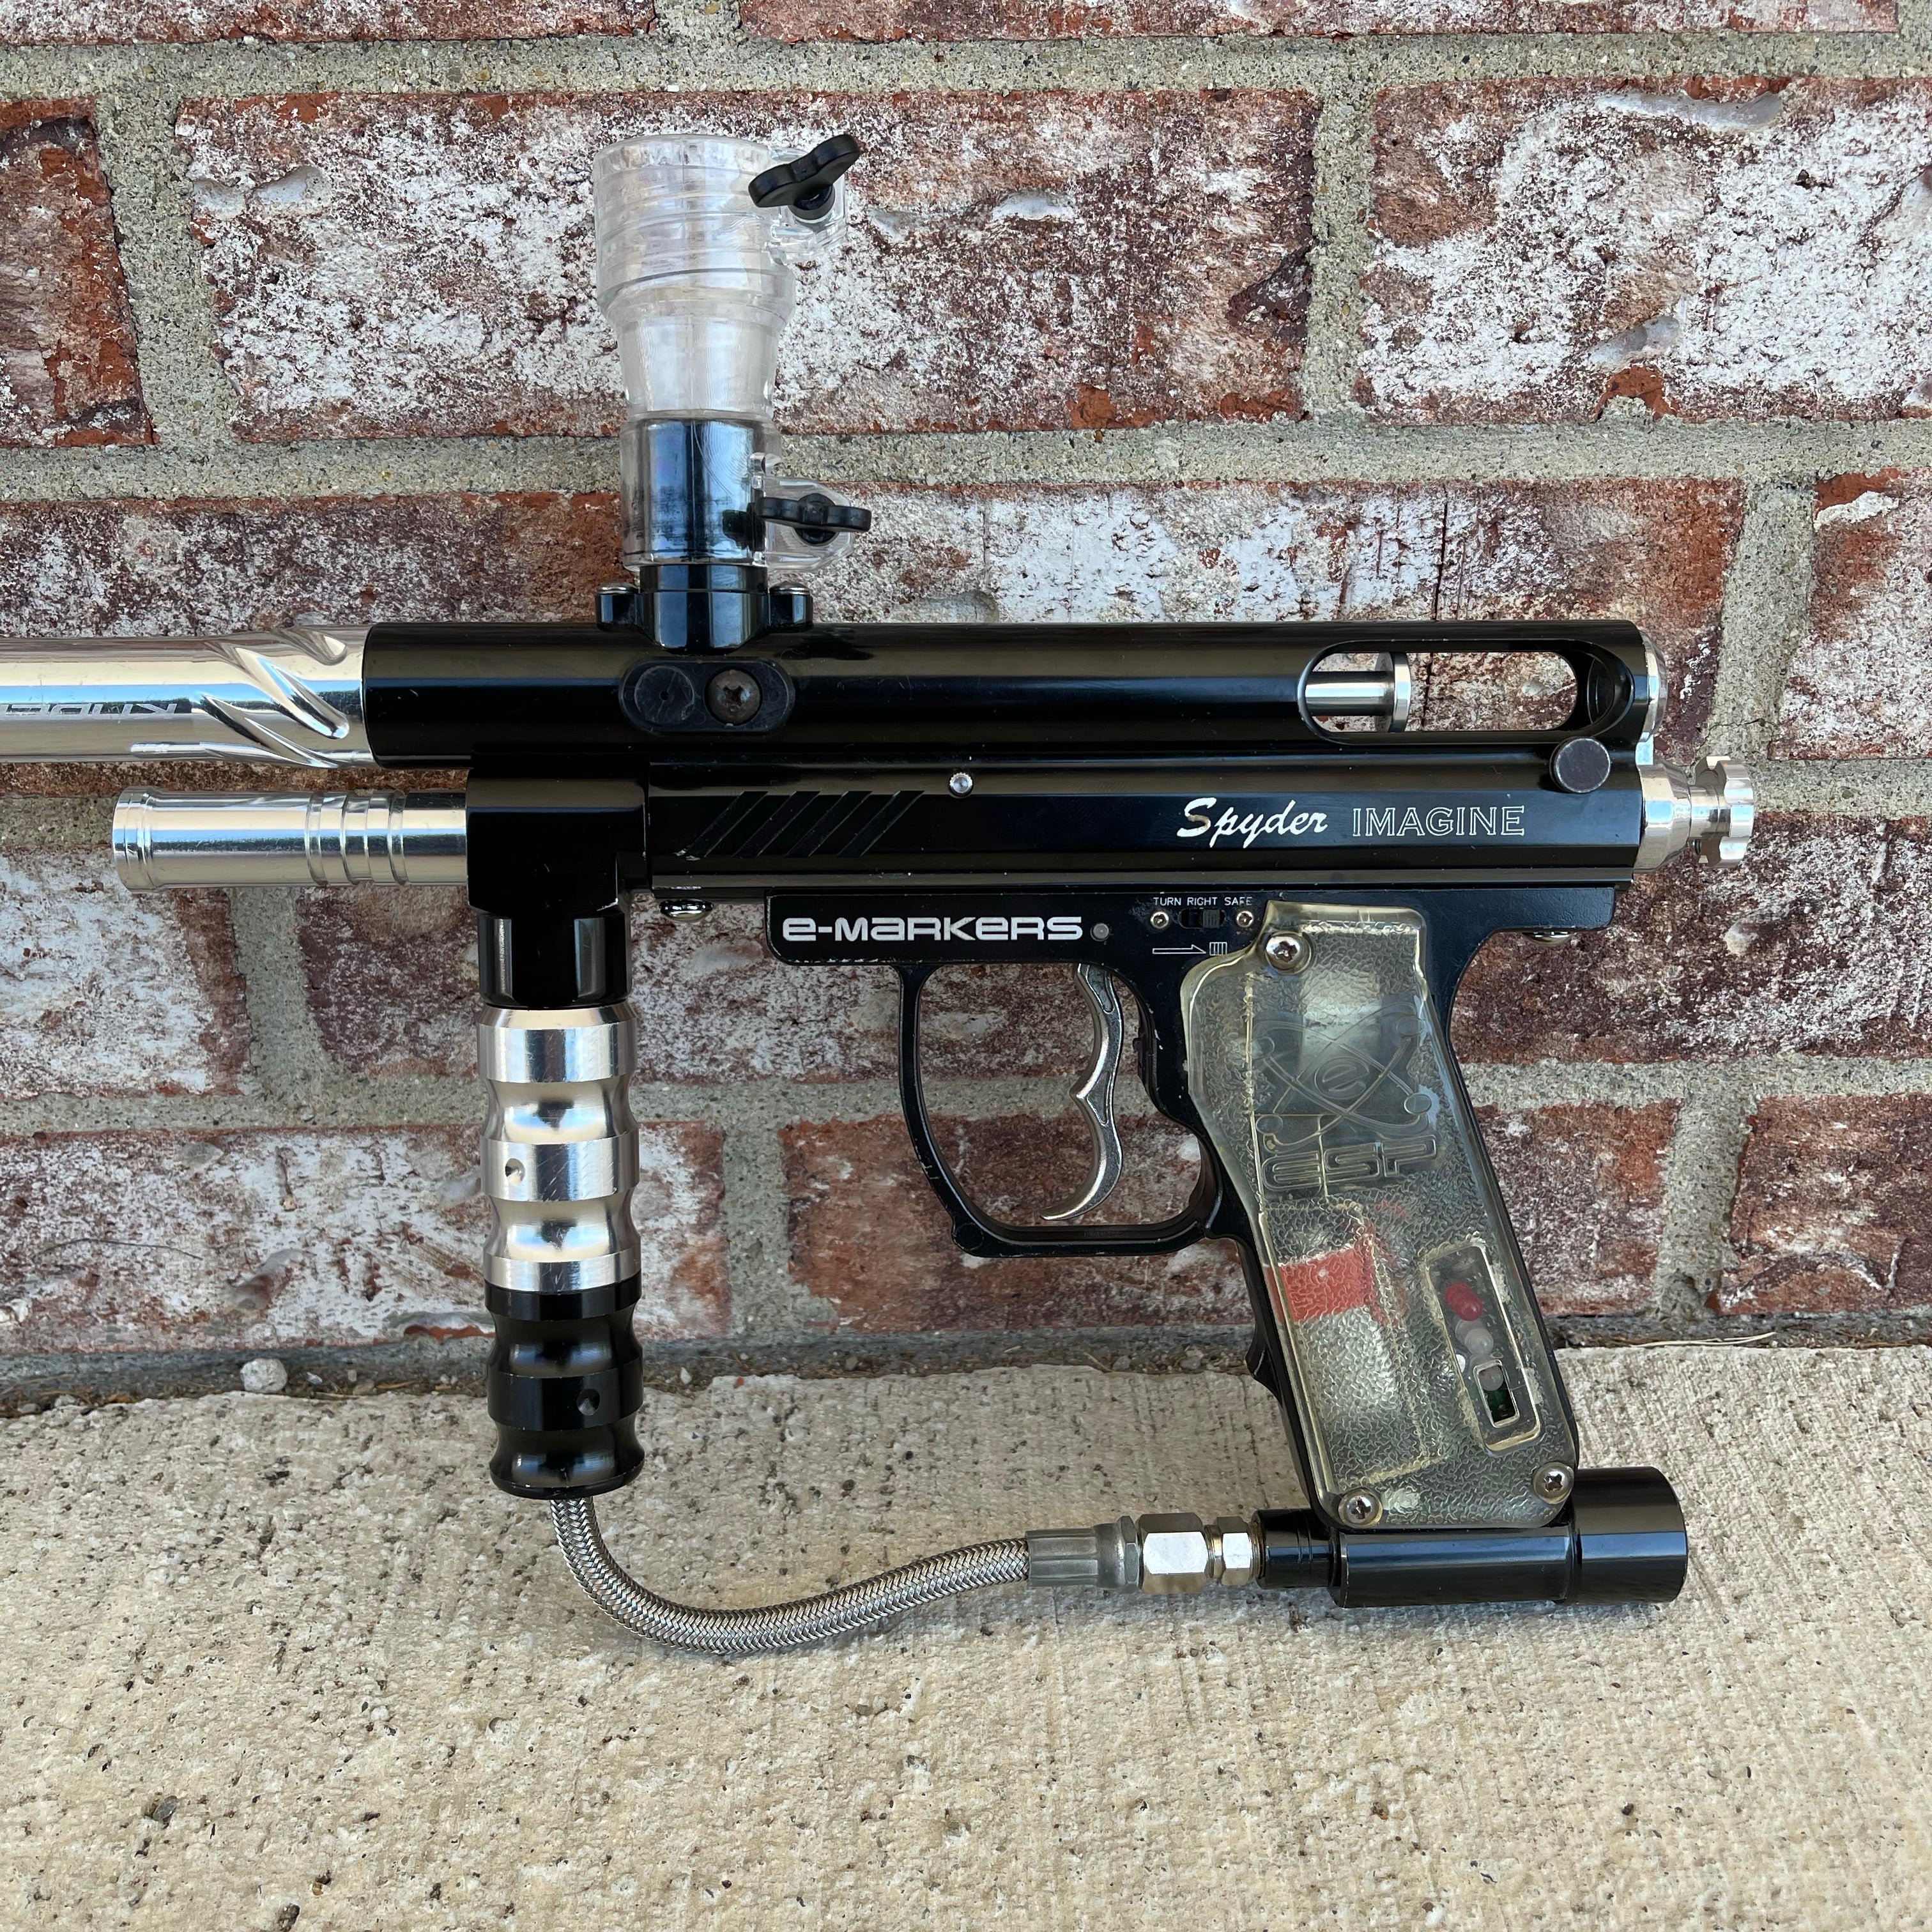 Used Spyder Paintball Gun - Lot of 3